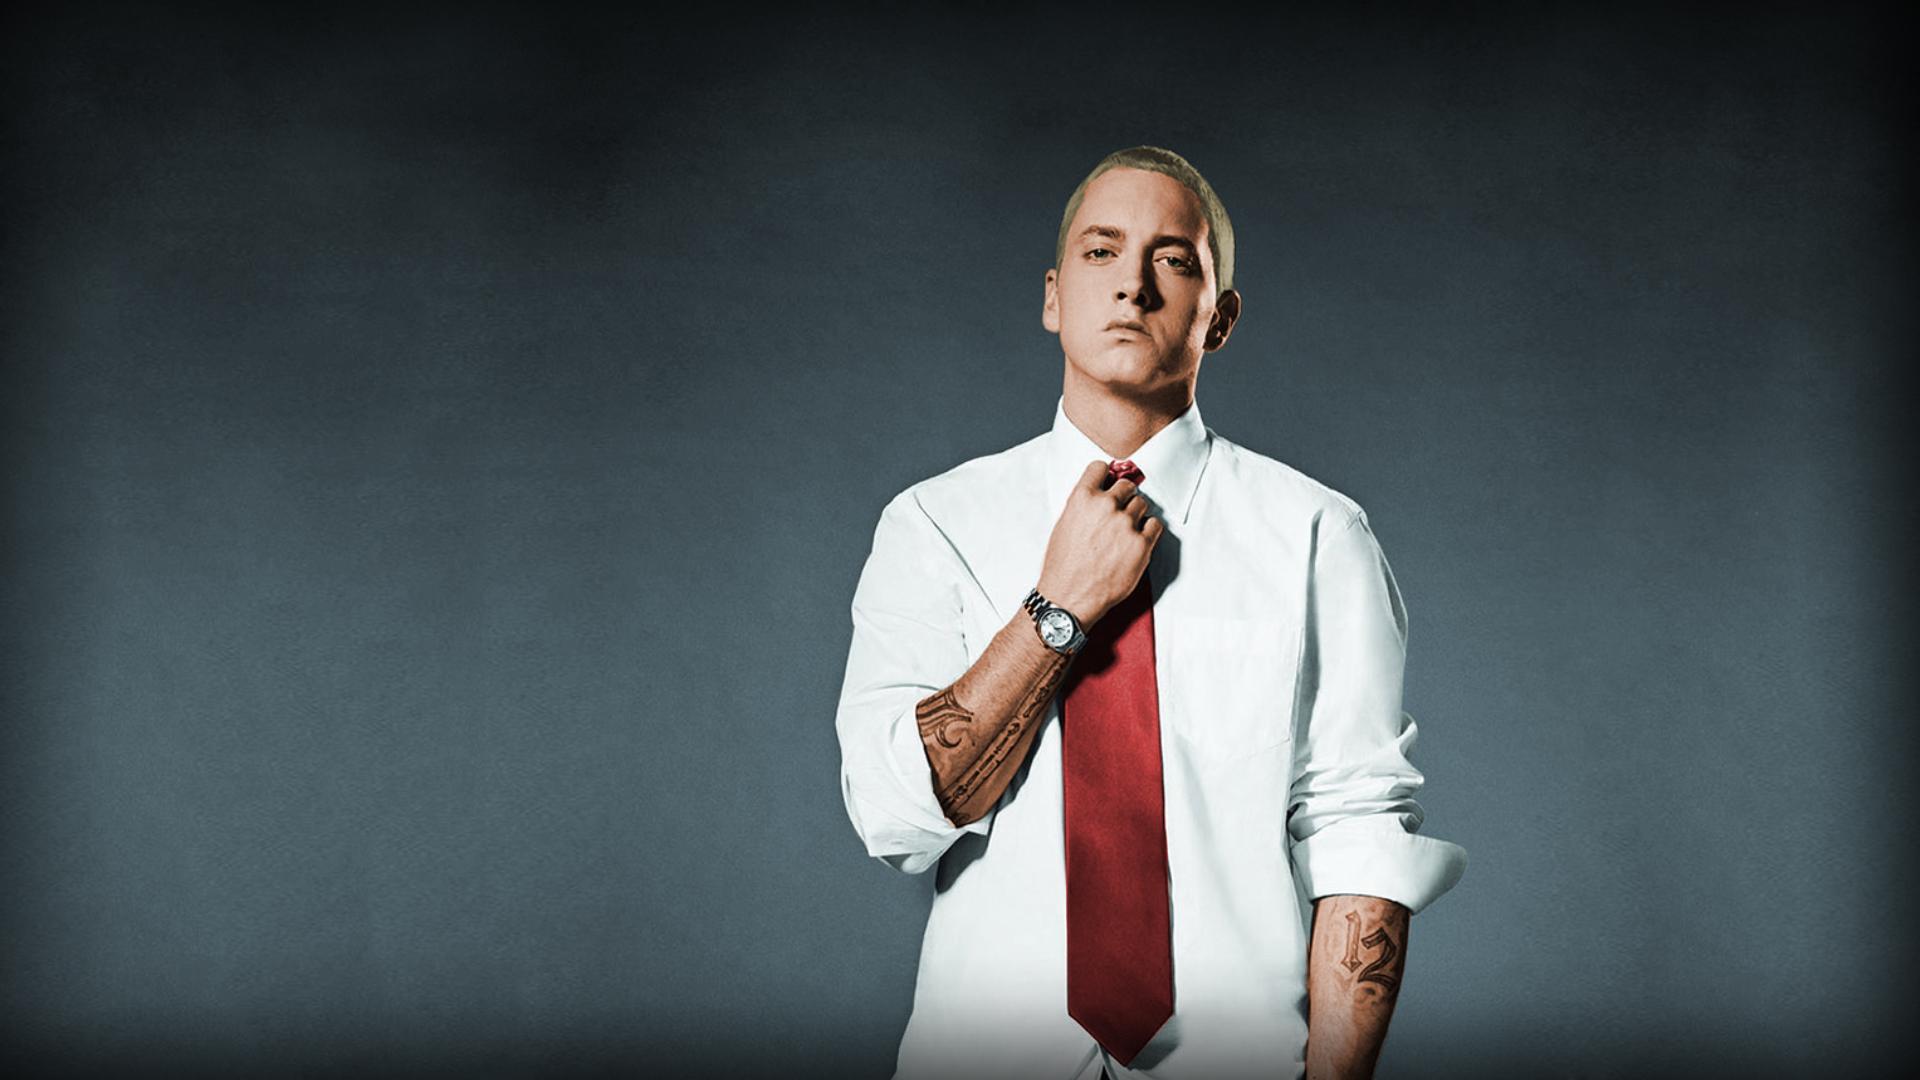 Eminem “Guts Over Fear” ft. Sia (Explicit)